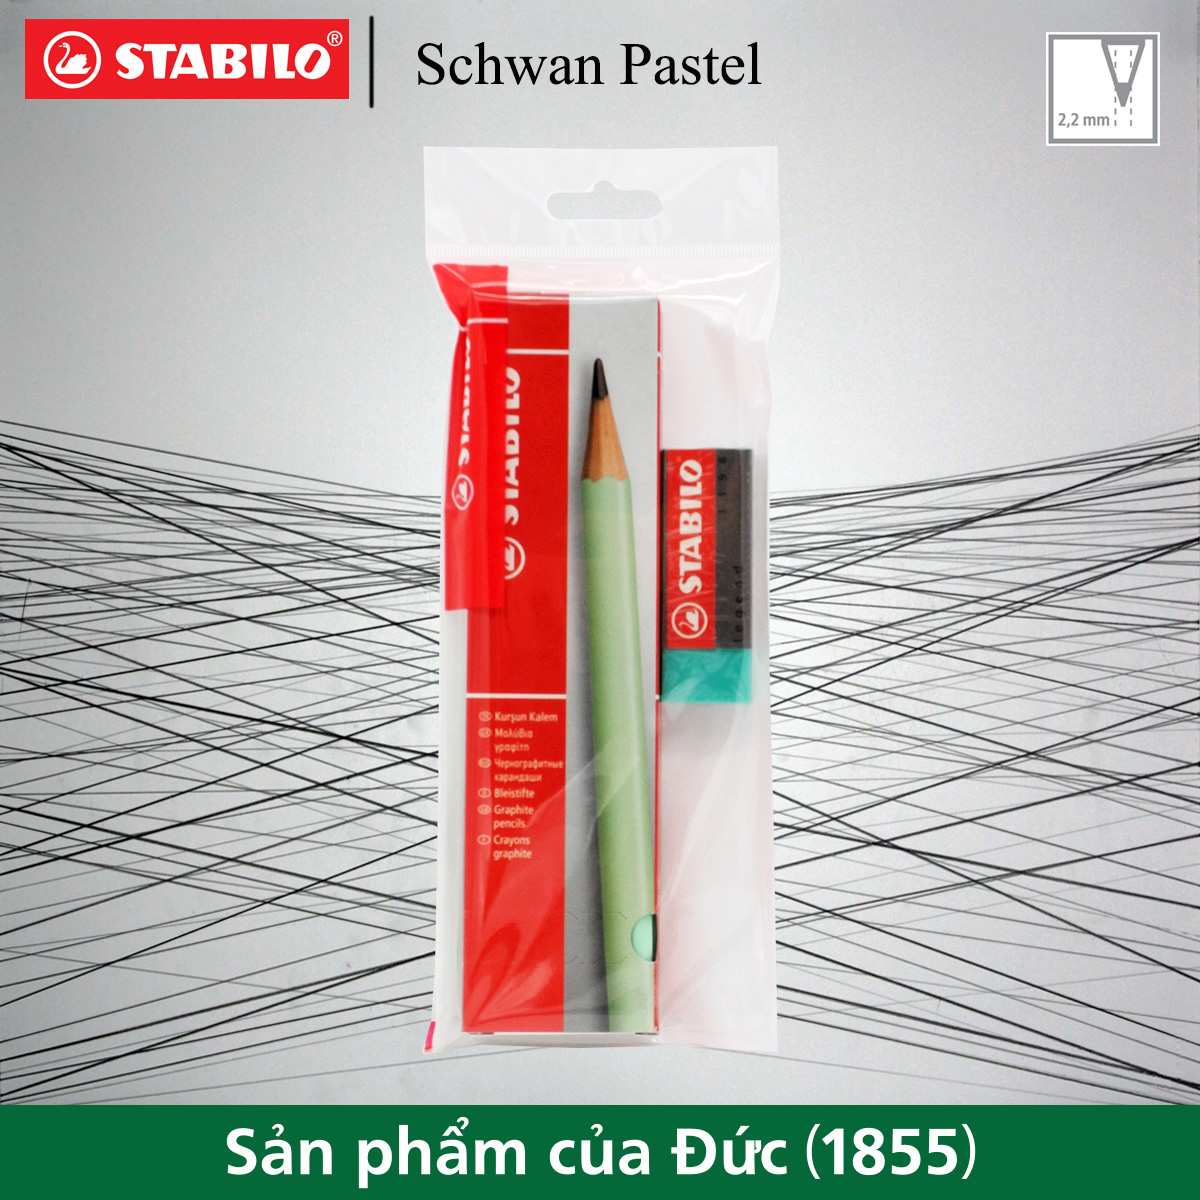 Bộ 12 bút chì gỗ STABILO Schwan Pastel 421 2B (hộp)